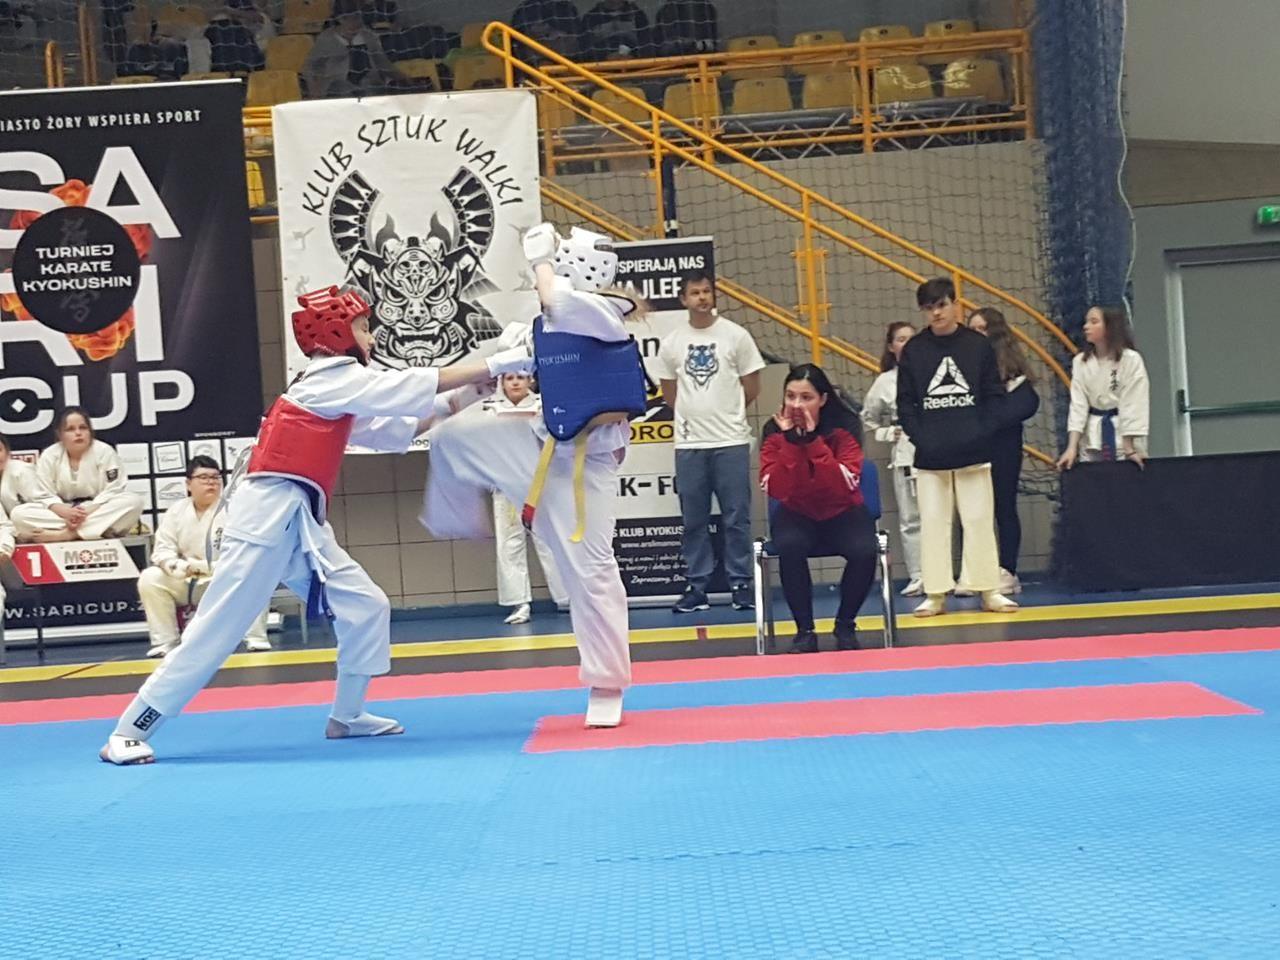 Zdj. nr. 4. Ogólnopolski Turniej Karate Kyokushin Sari Cup 2019